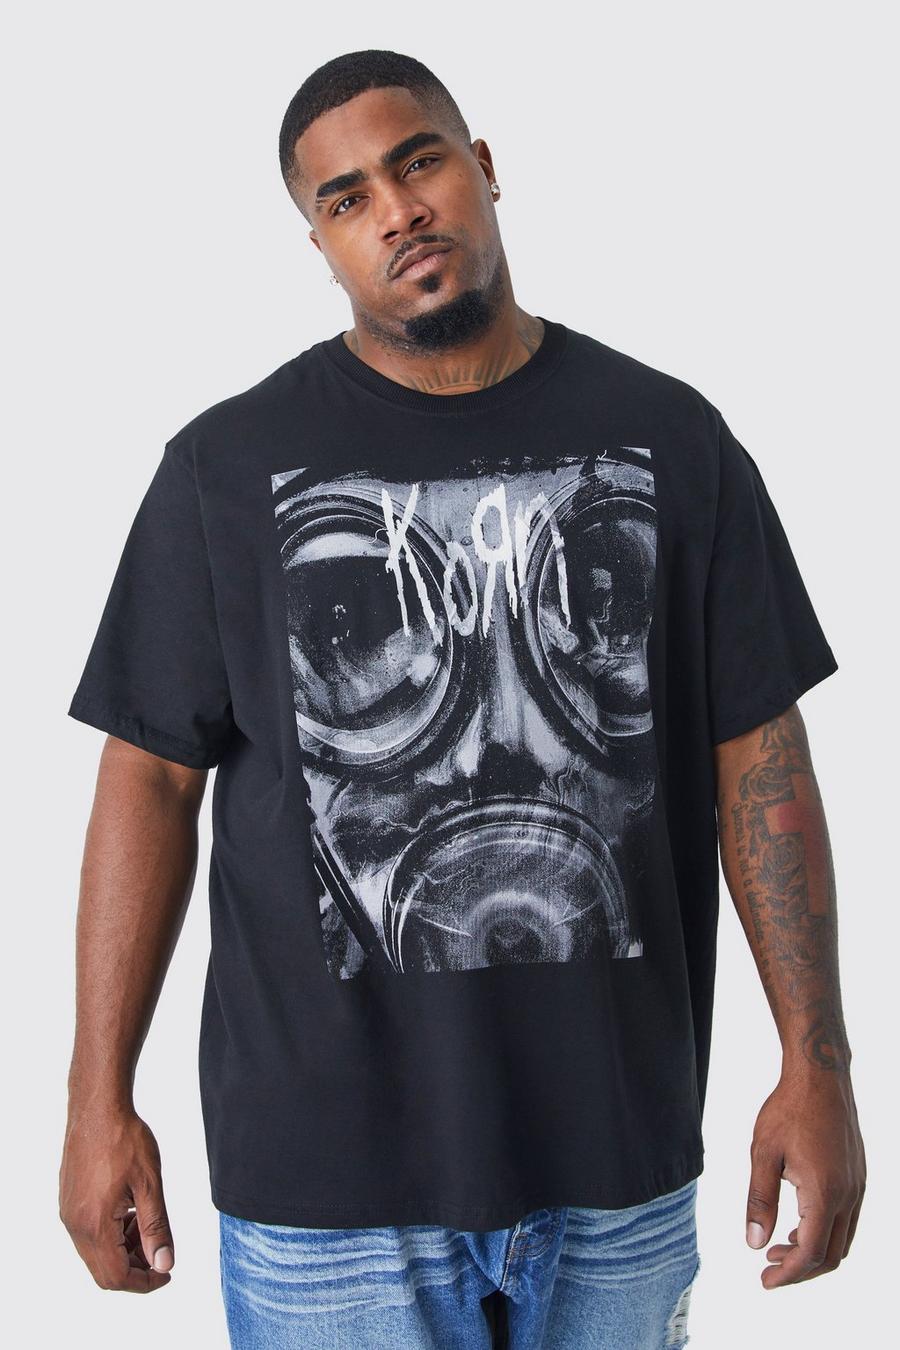 T-shirt Plus Size ufficiale Korn, Black nero